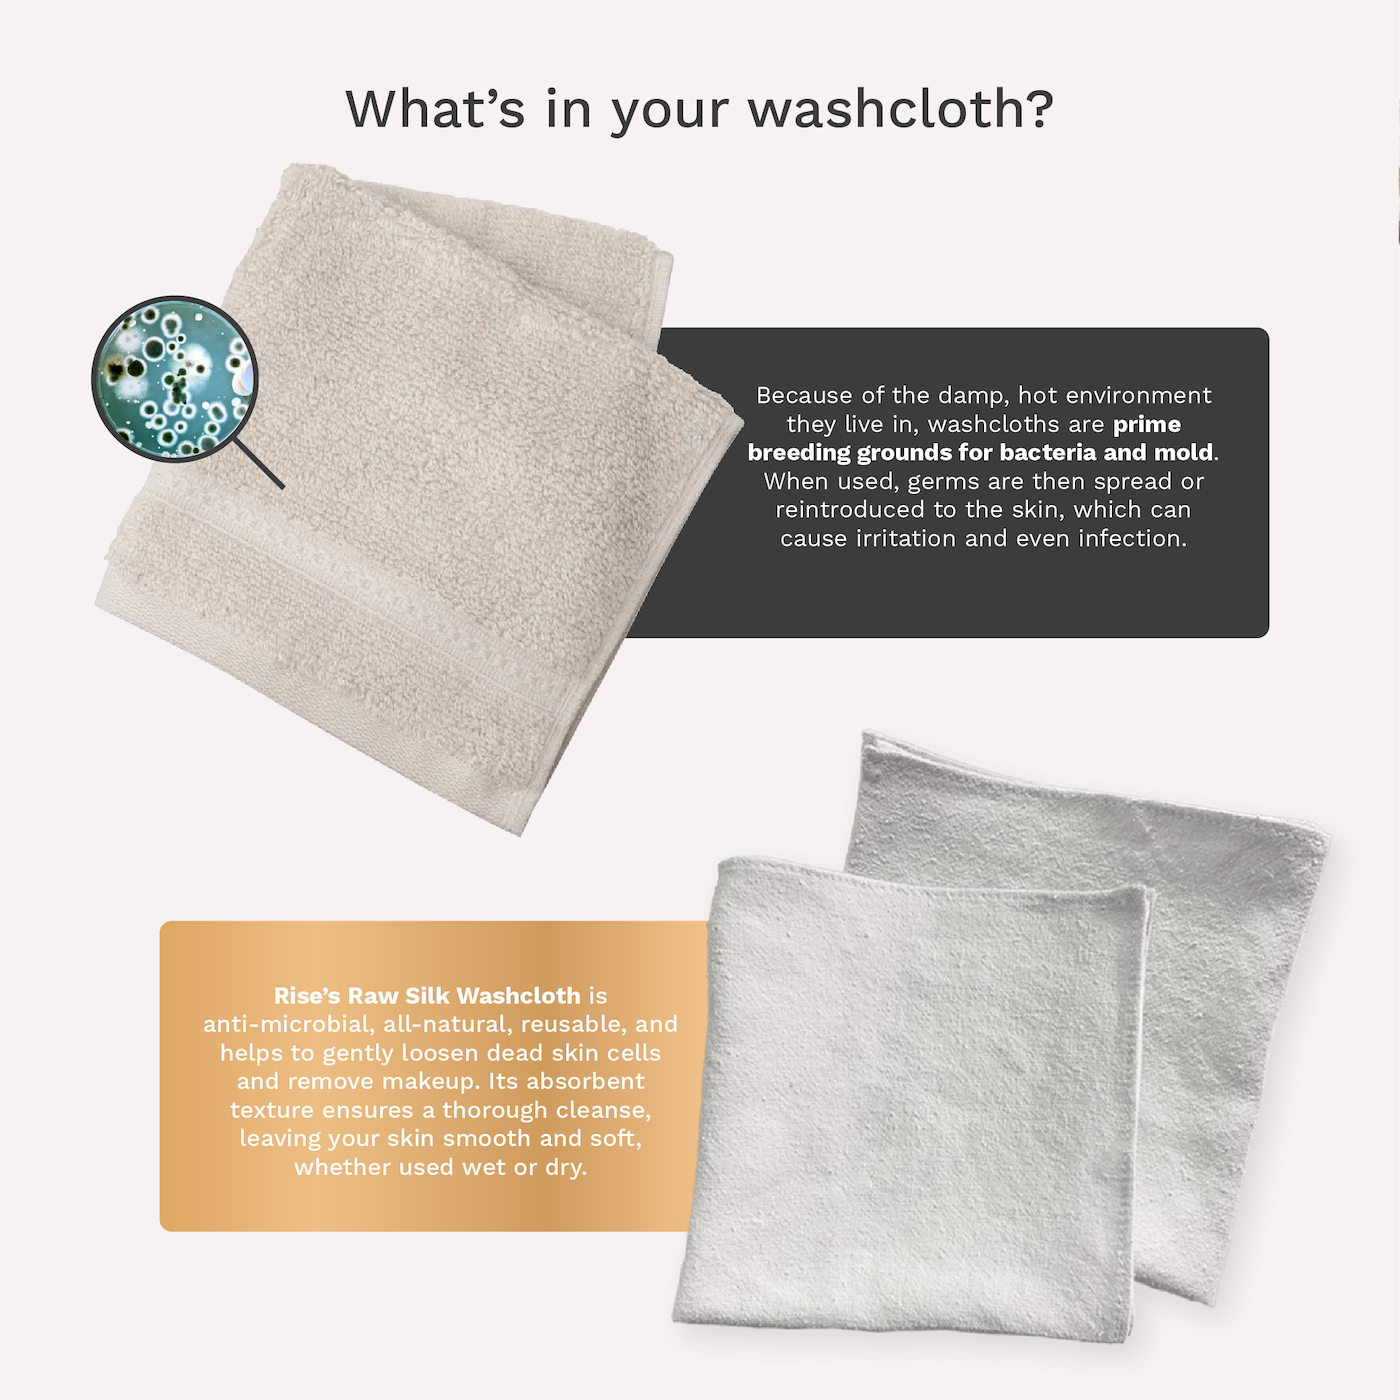 Comparison of normal cotton washcloth to raw silk washcloth benefits